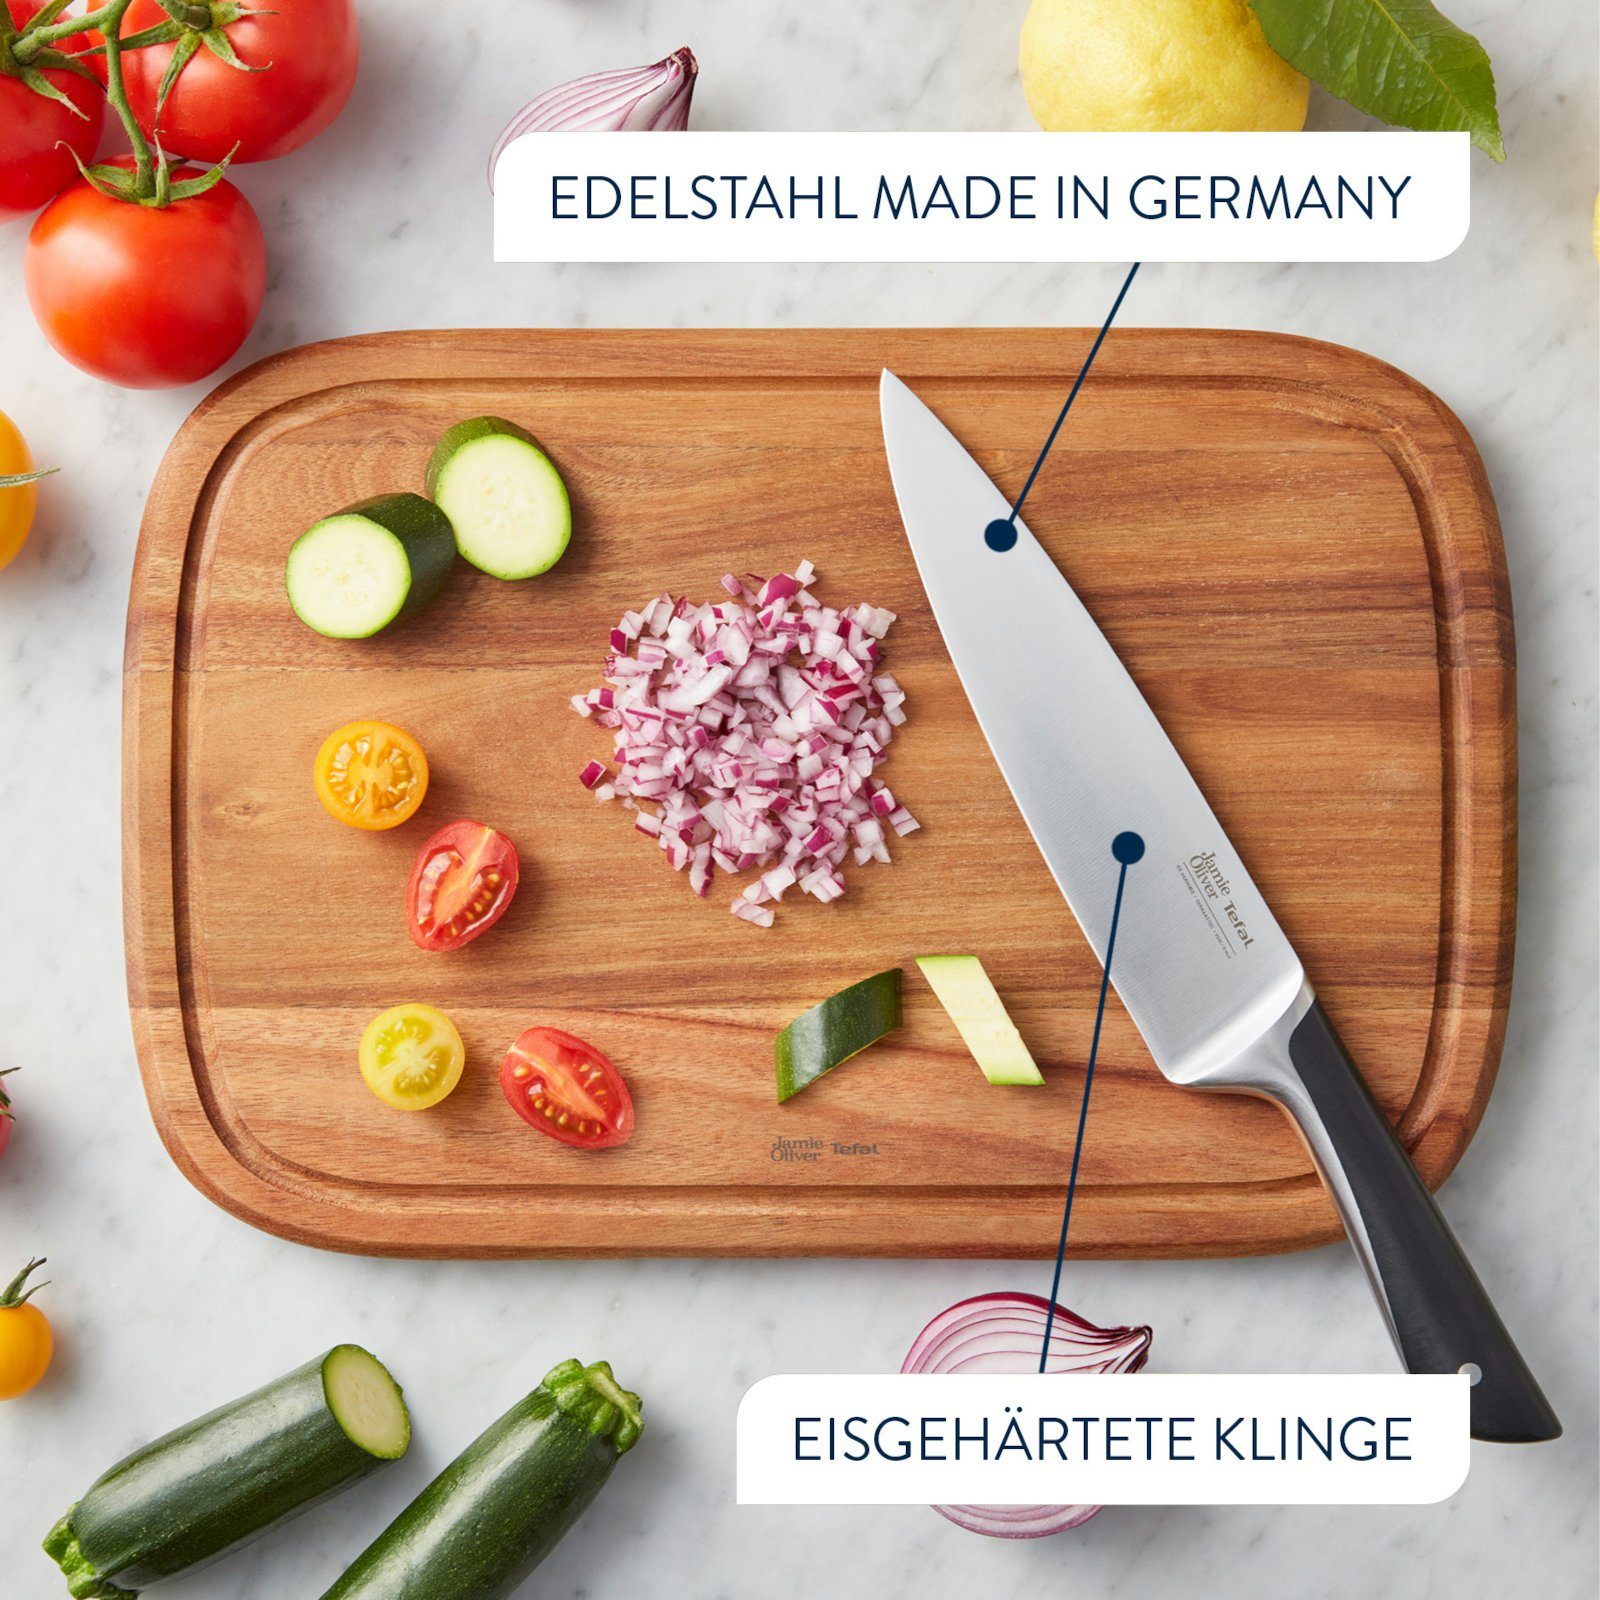 Tefal Kochmesser Jamie Oliver 20 cm Chefs Einhandmesser Knife Kochmesser Messer